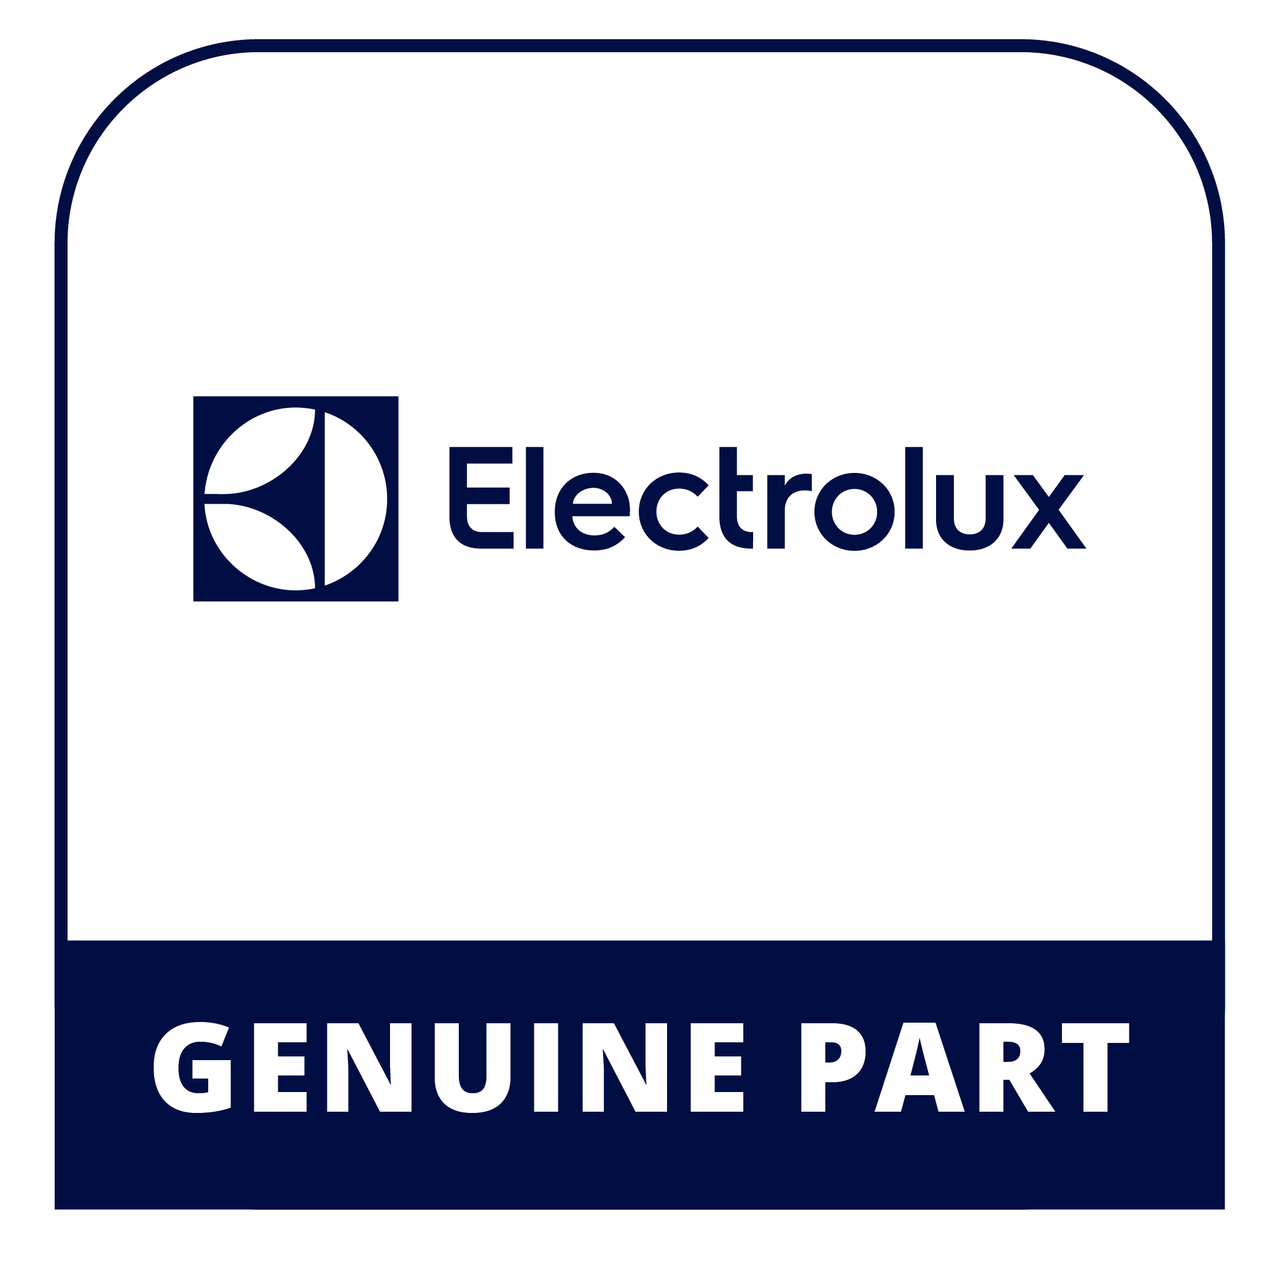 Frigidaire - Electrolux 318146010 Bushing - Genuine Electrolux Part